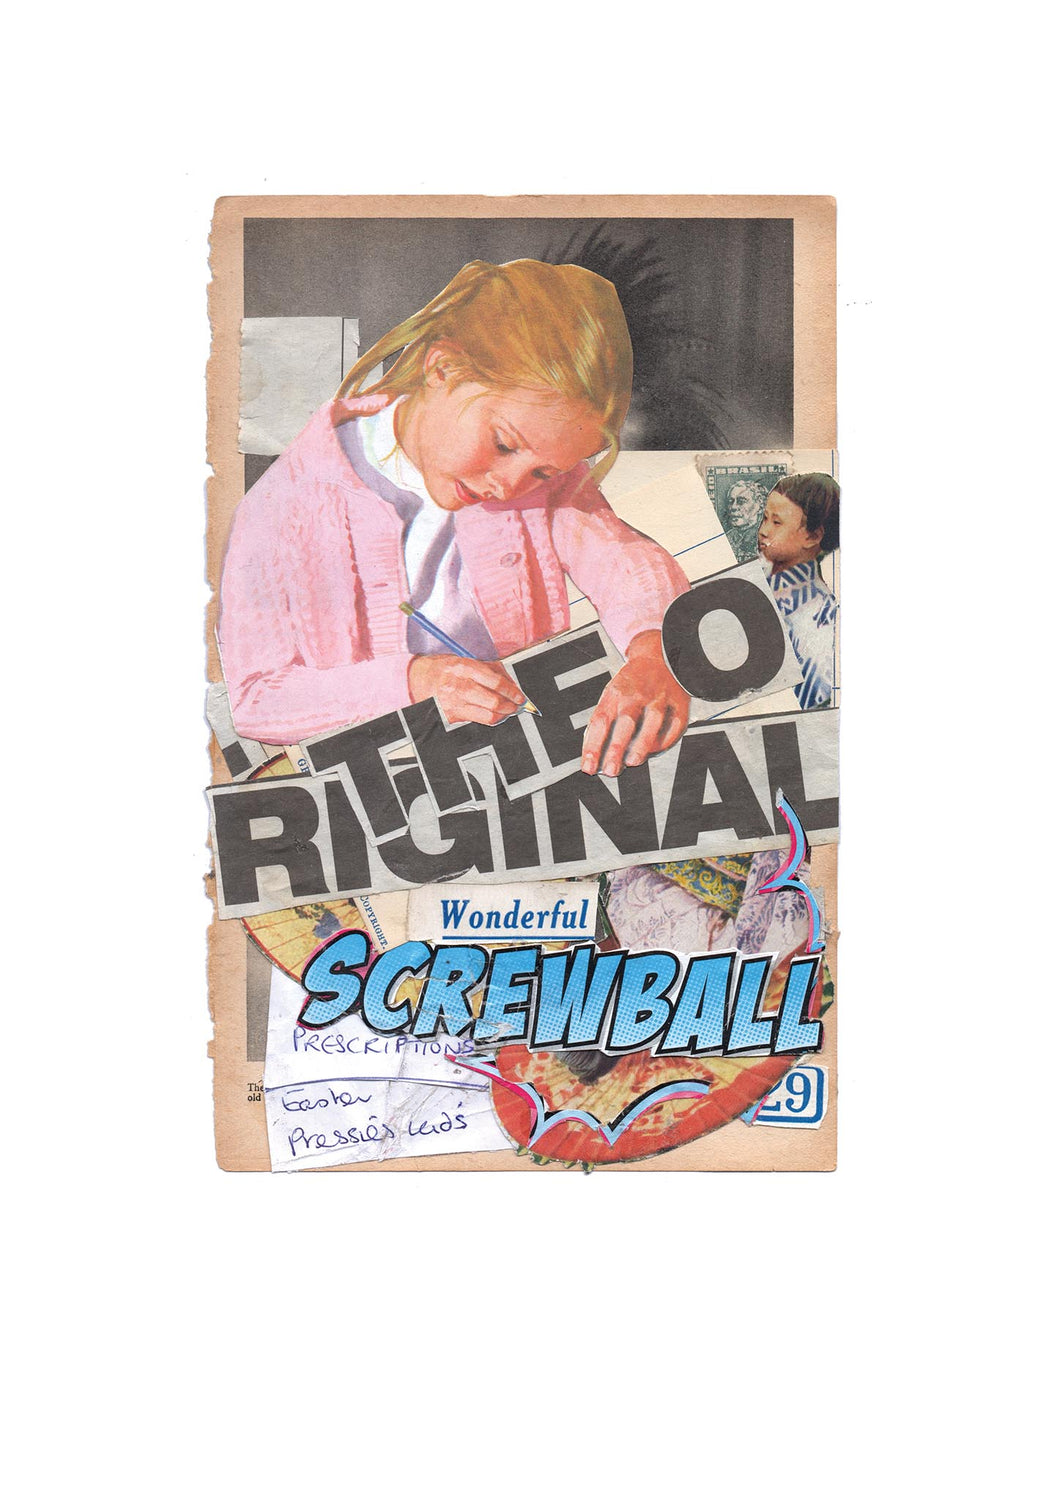 16: Screwball